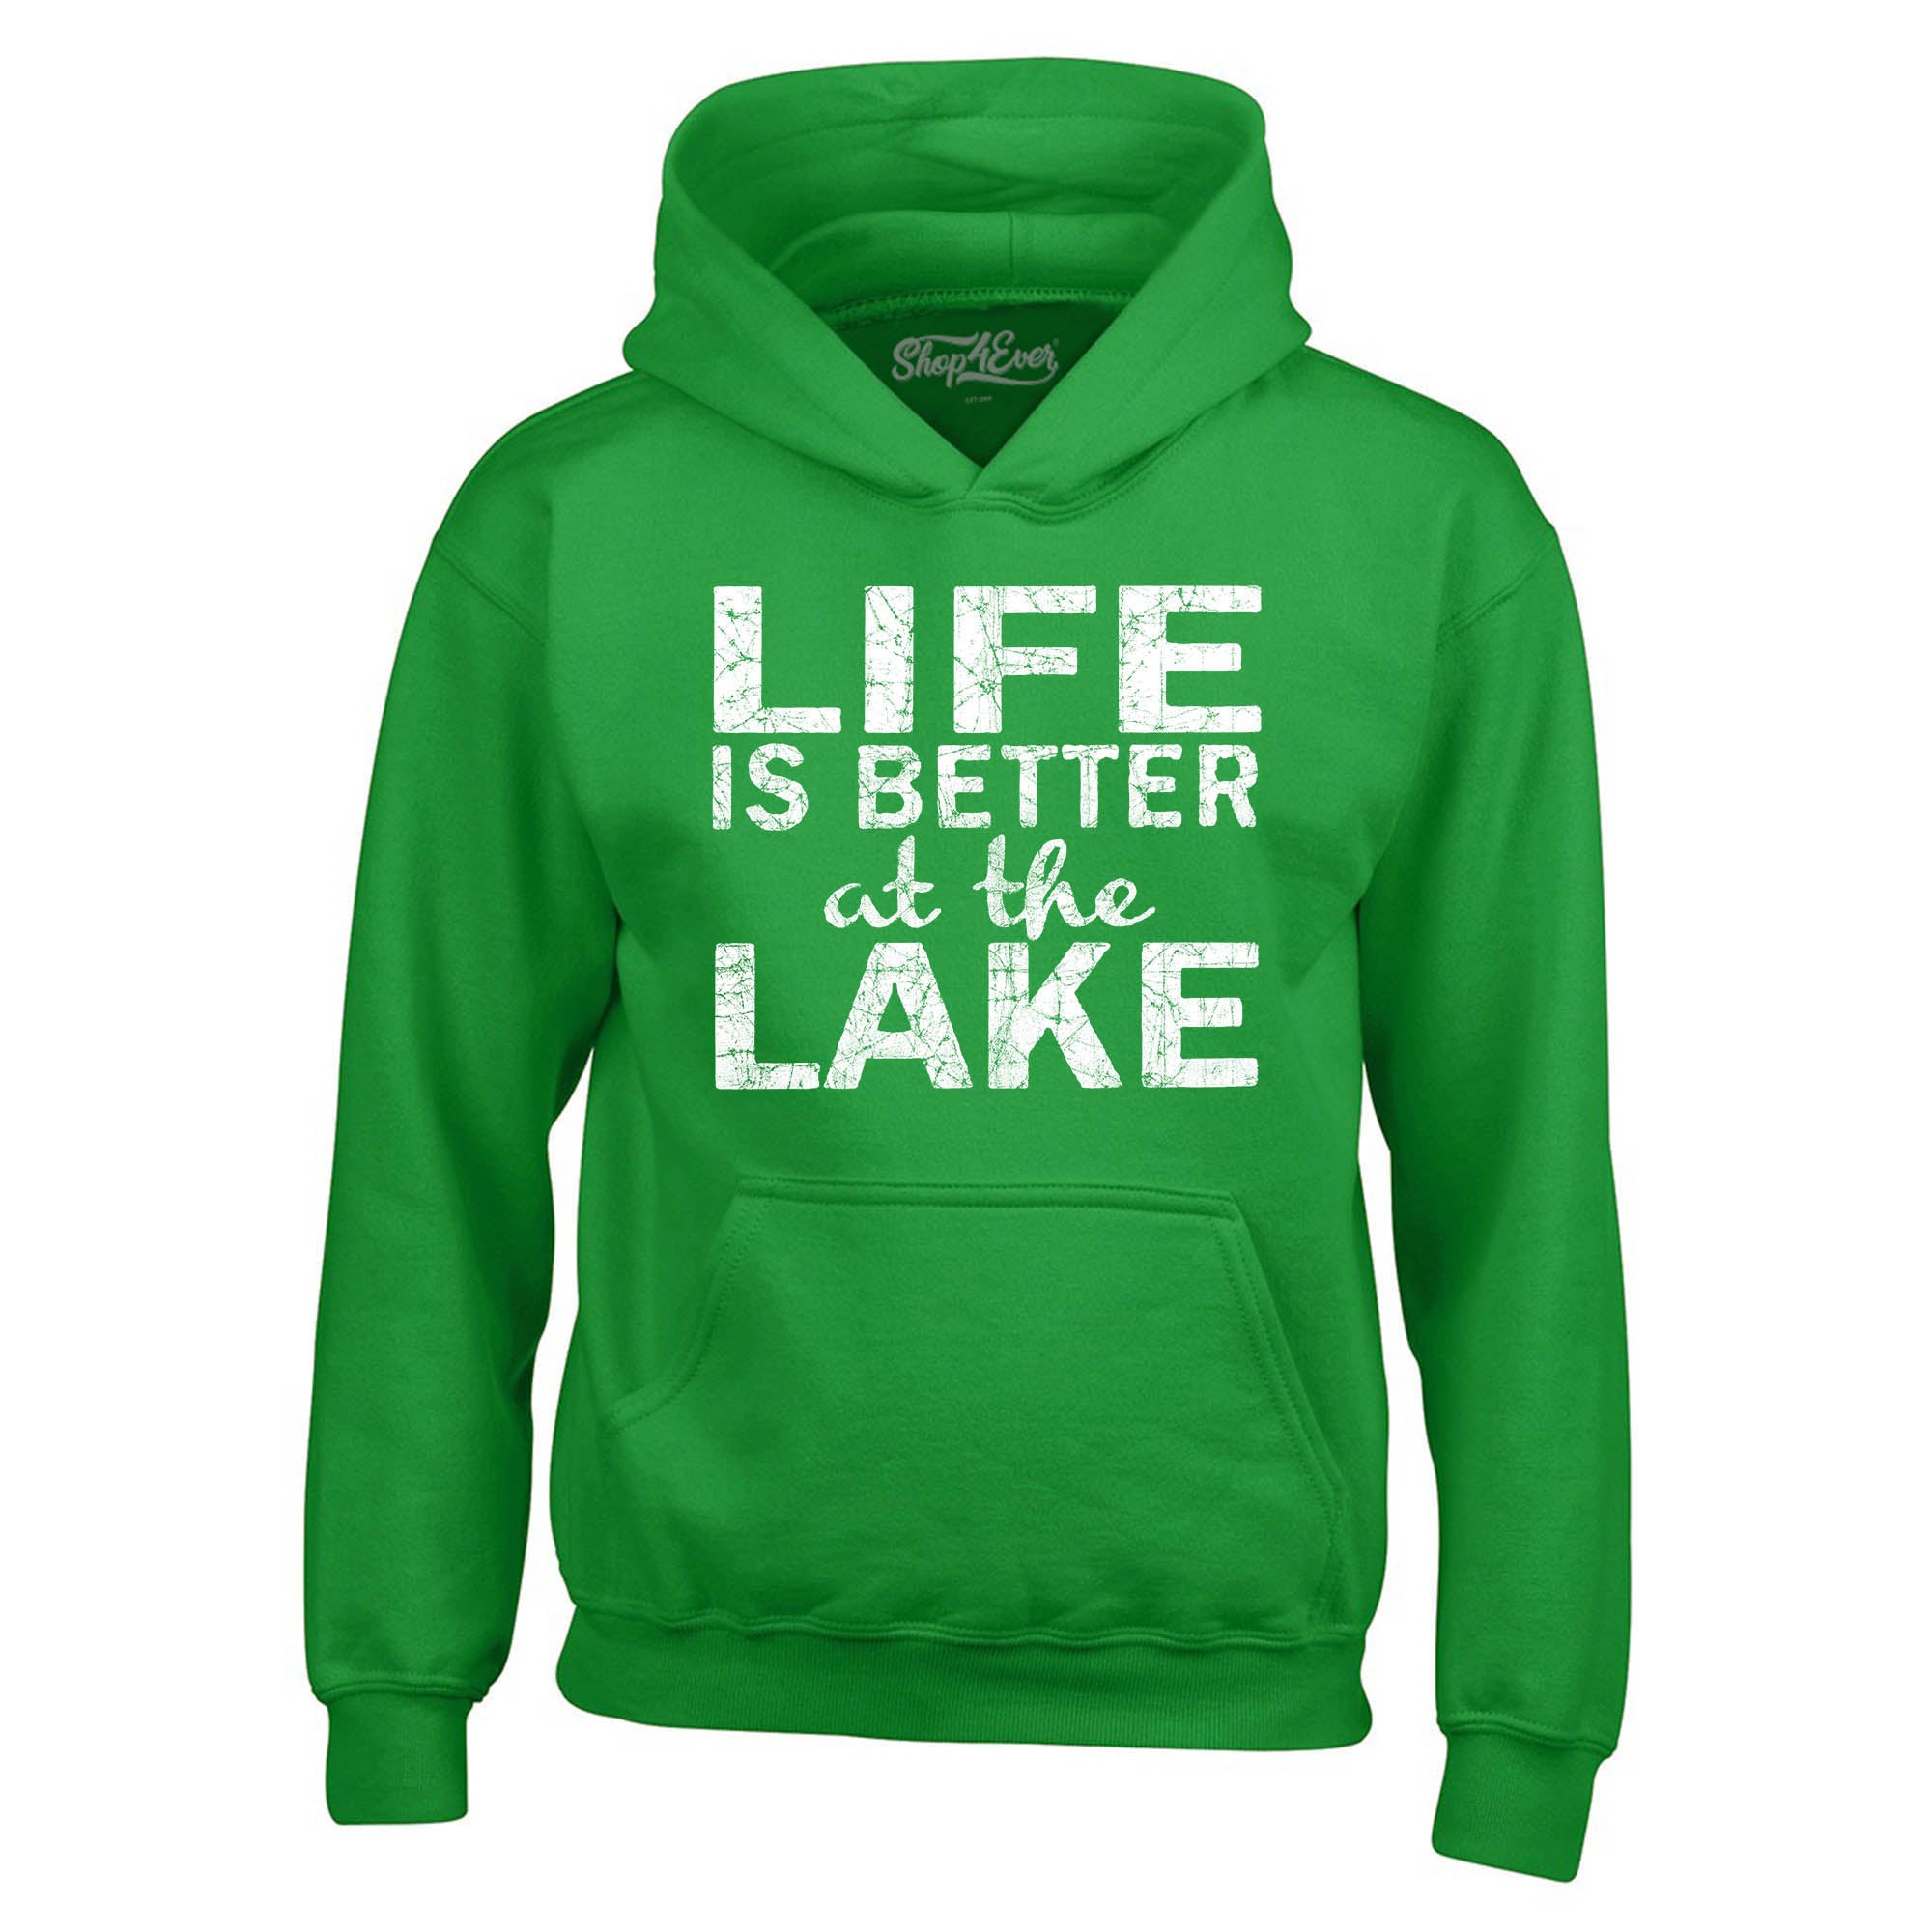 Life is Better at The Lake Hoodies Sayings Sweatshirts